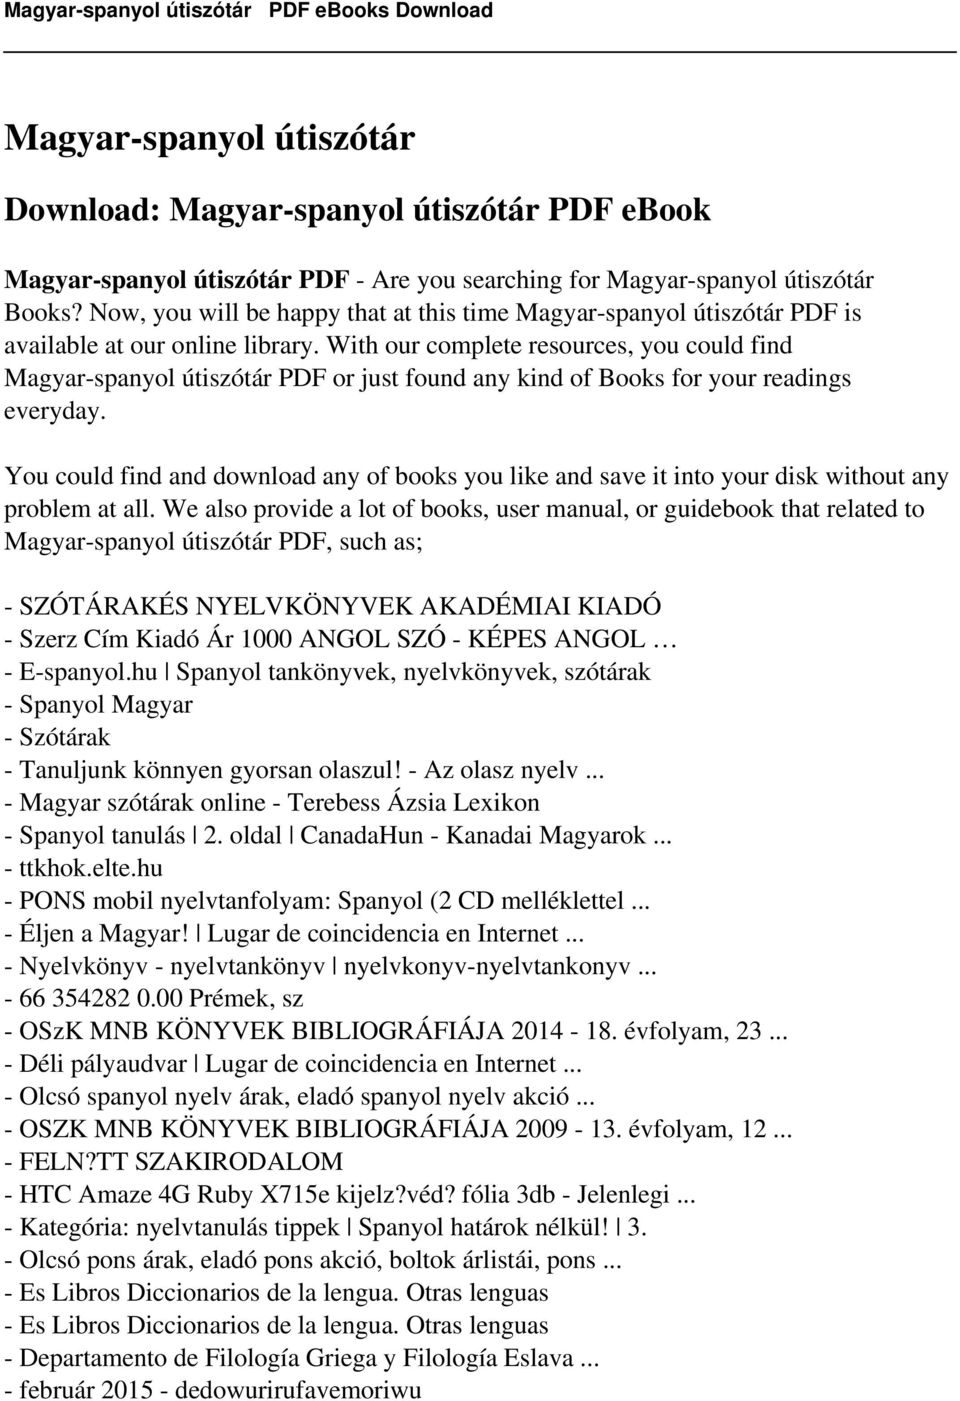 Magyar-spanyol útiszótár - PDF Free Download